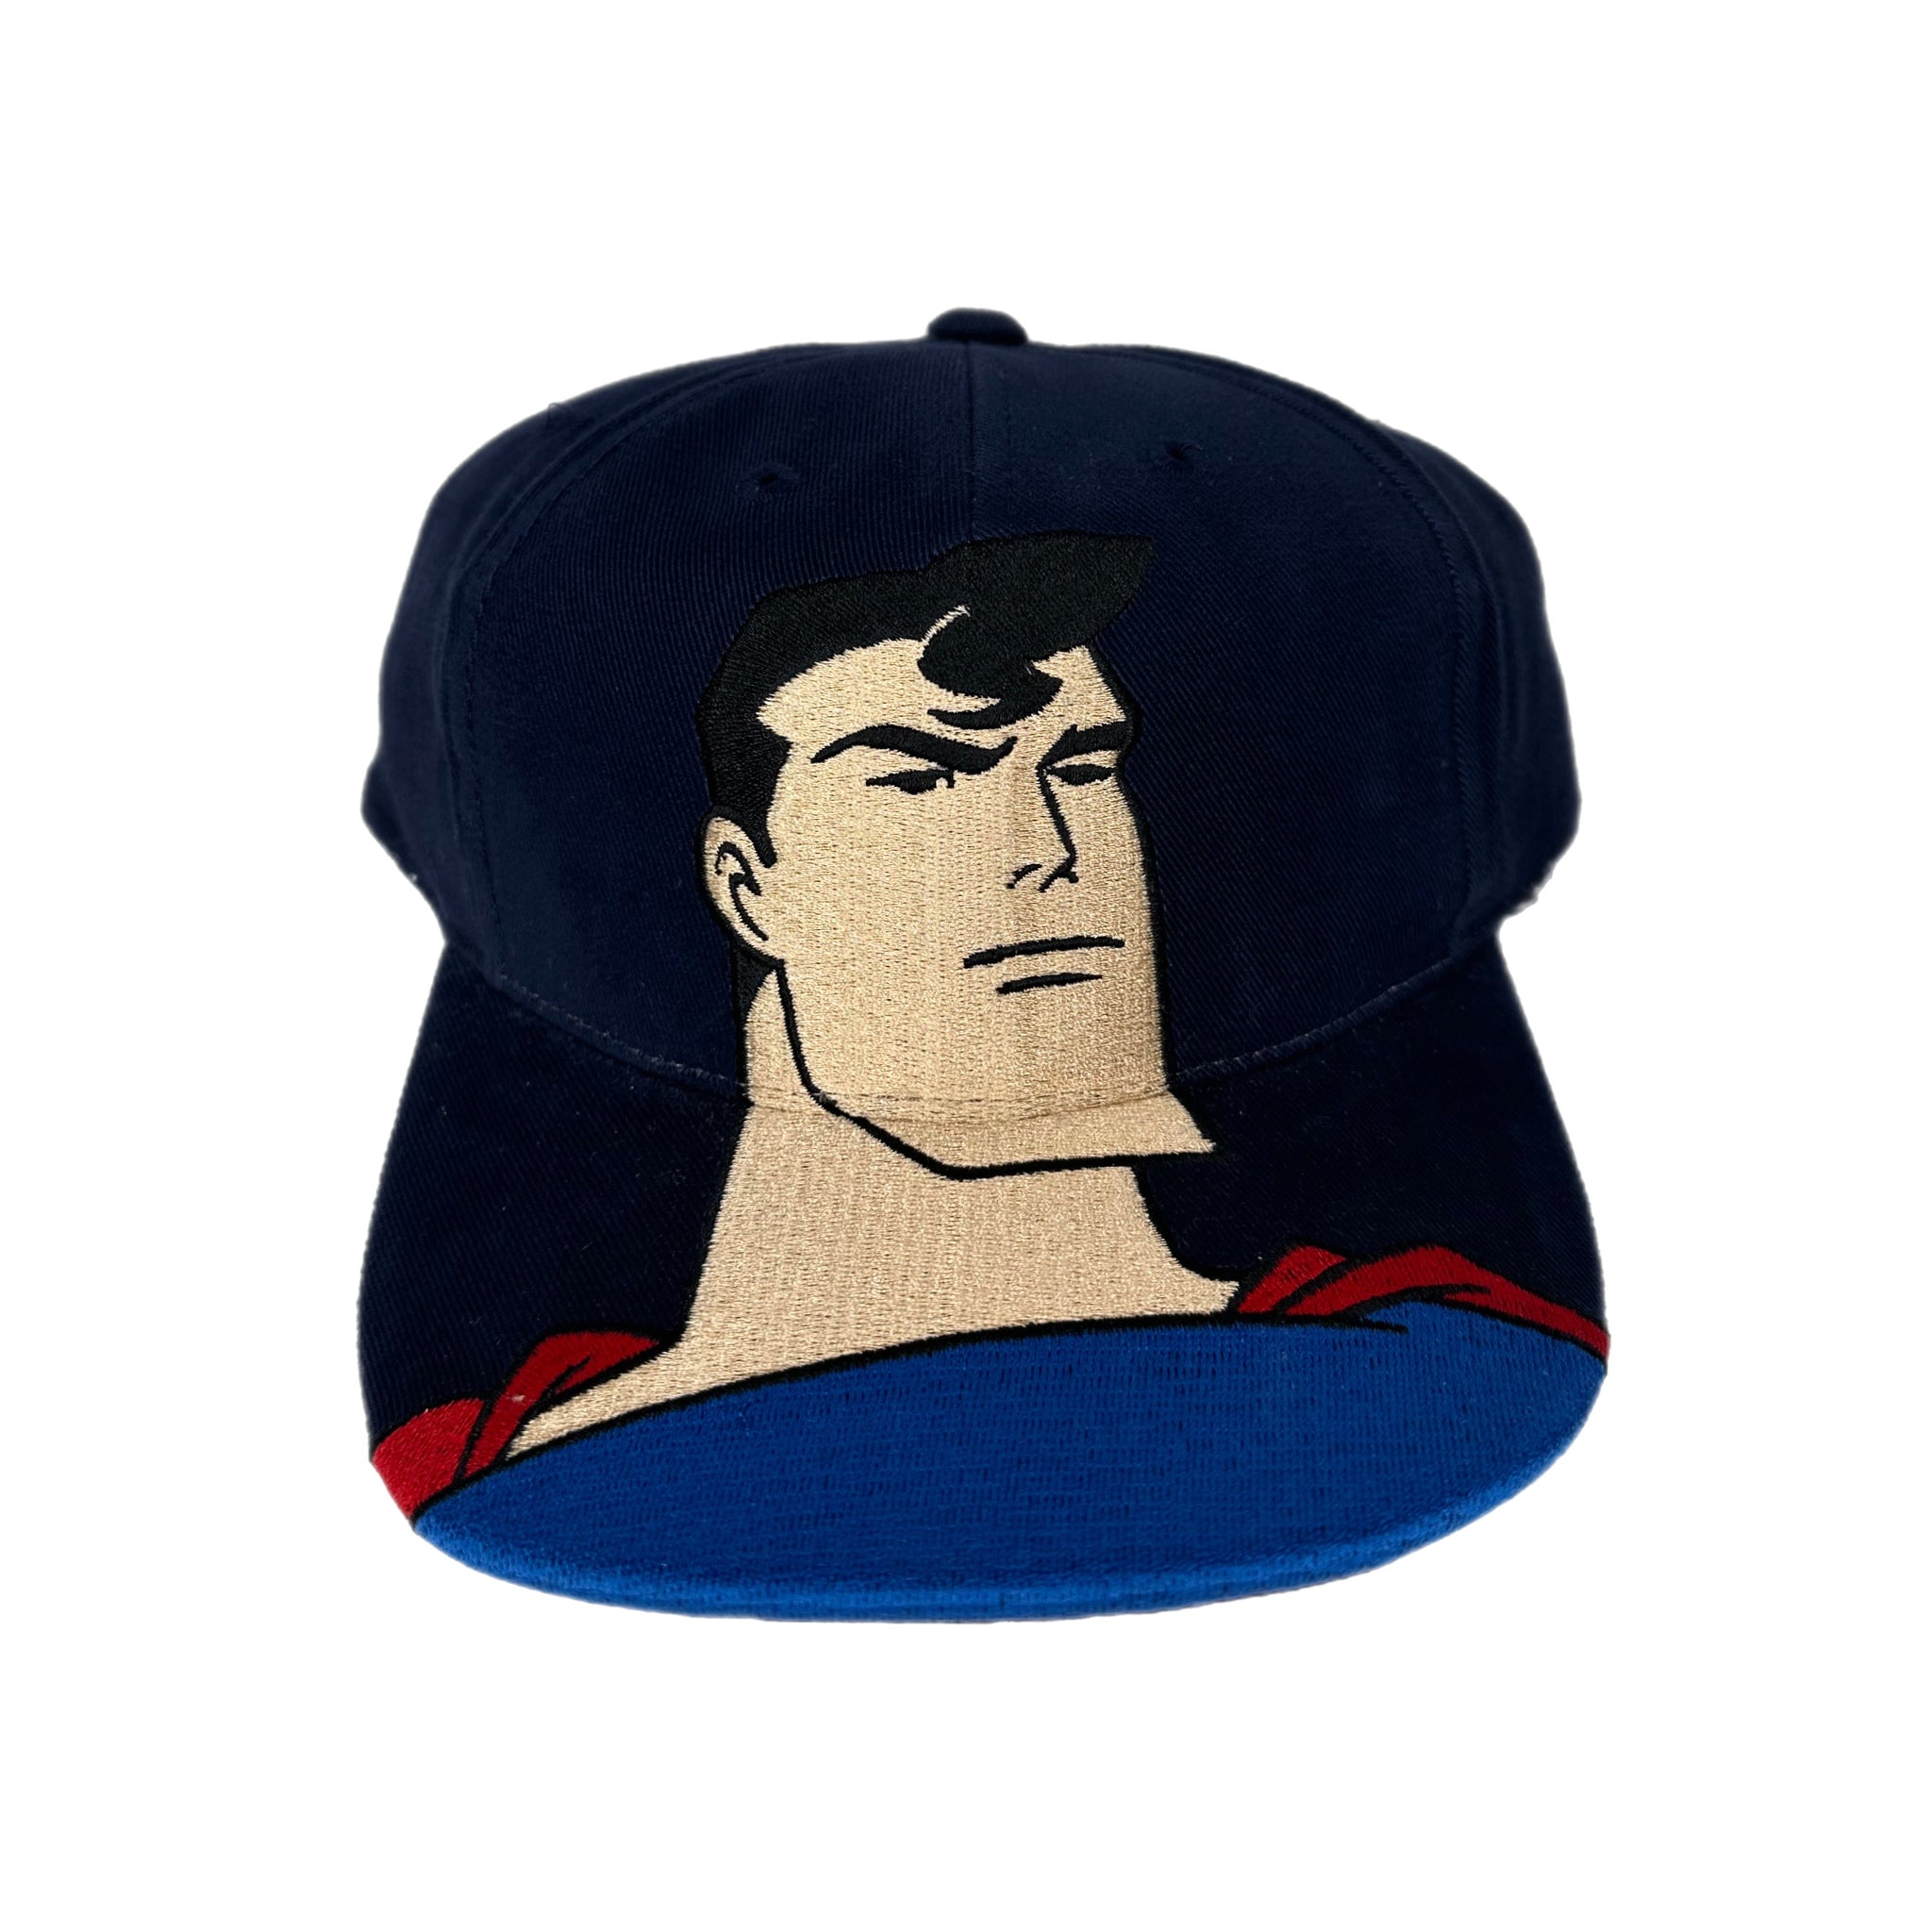 Vintage 90s Superman Youth Hat DC Comics Superhero Kids Boys Girls Baseball Cap